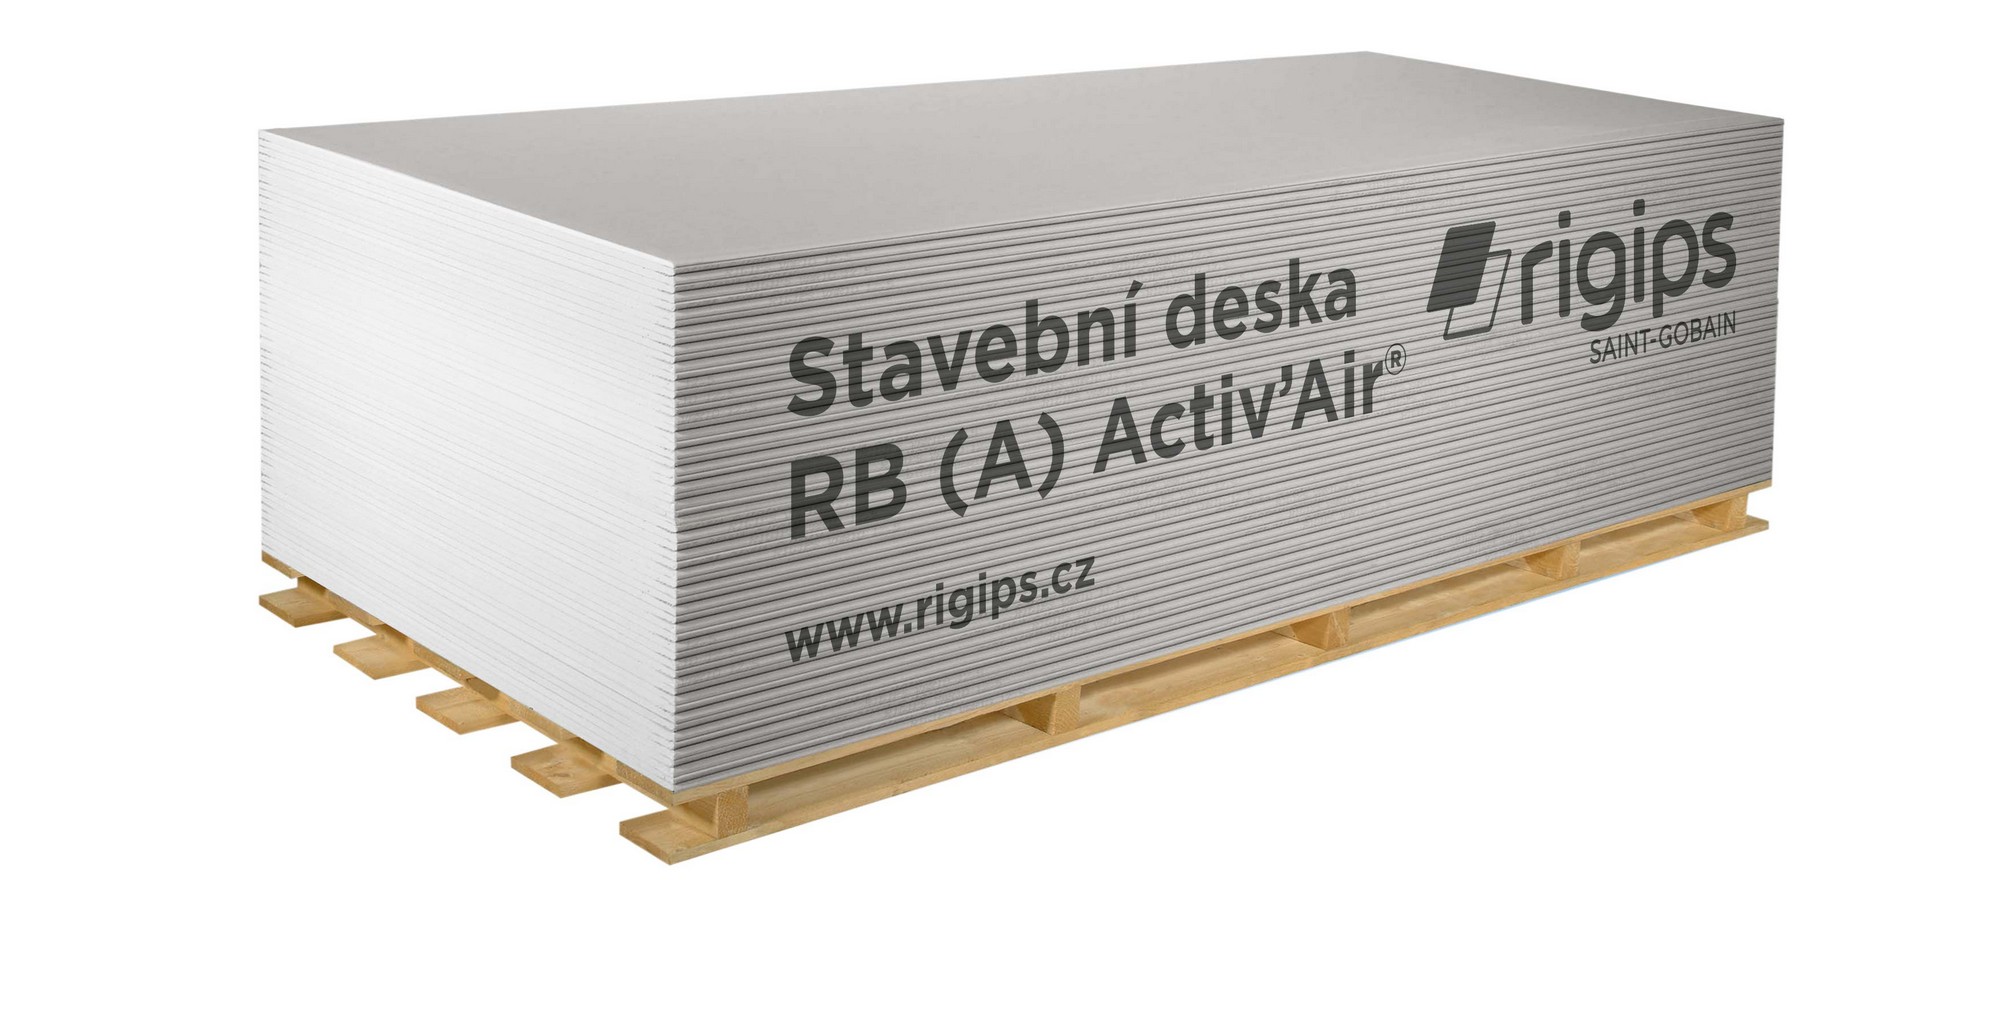 Deska sádrokartonová Rigips RB (A) Activ' Air 12,5×1250×2000 mm